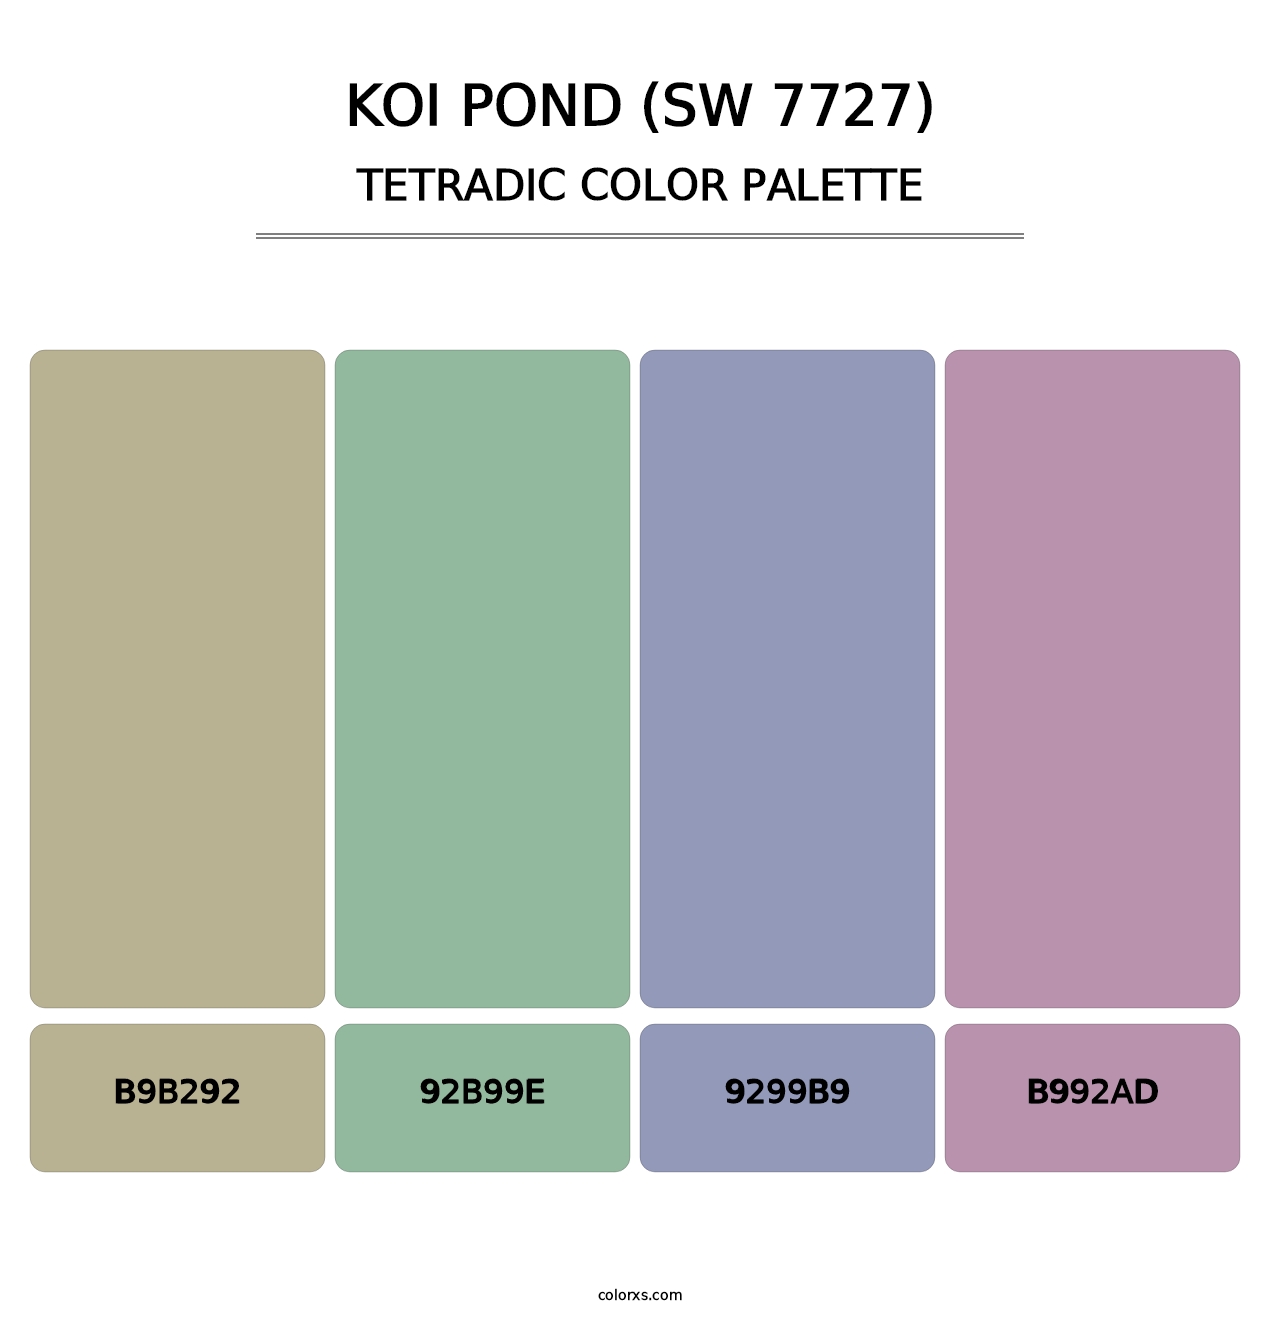 Koi Pond (SW 7727) - Tetradic Color Palette